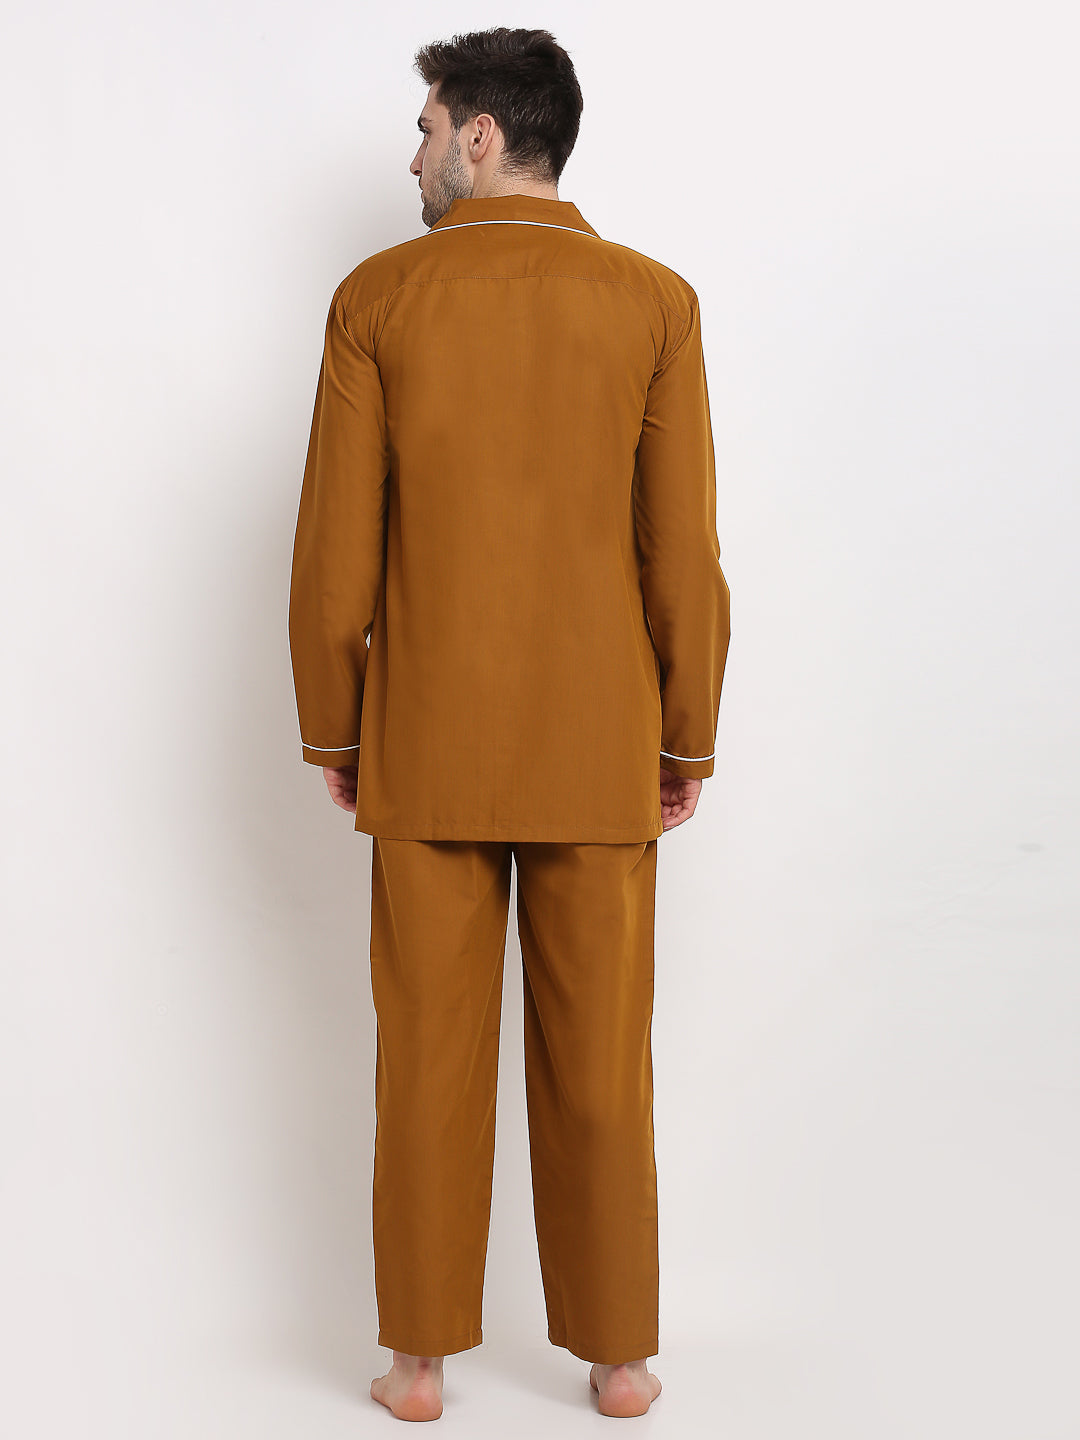 Men's Mustard Cotton Solid Night Suits ( GNS 003Mustard ) - Jainish